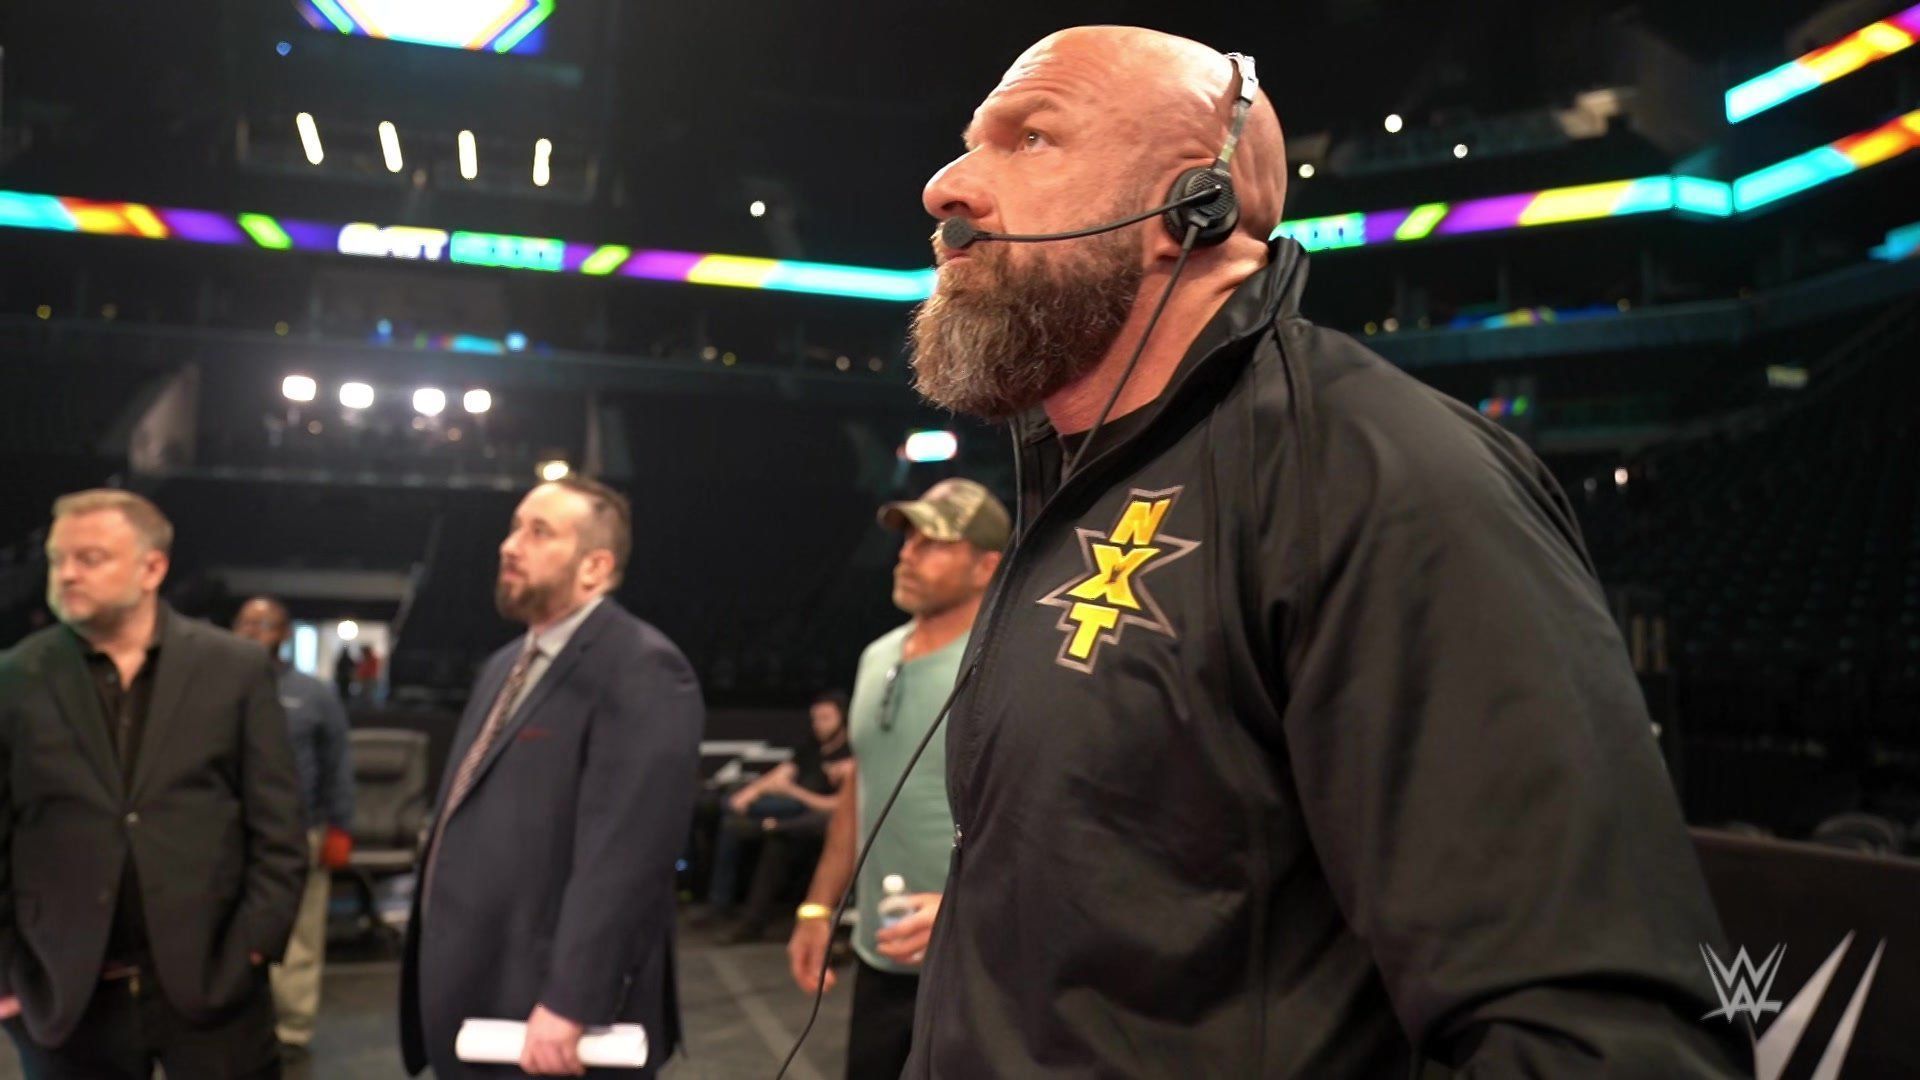 Triple H runs World Wrestling Entertainment